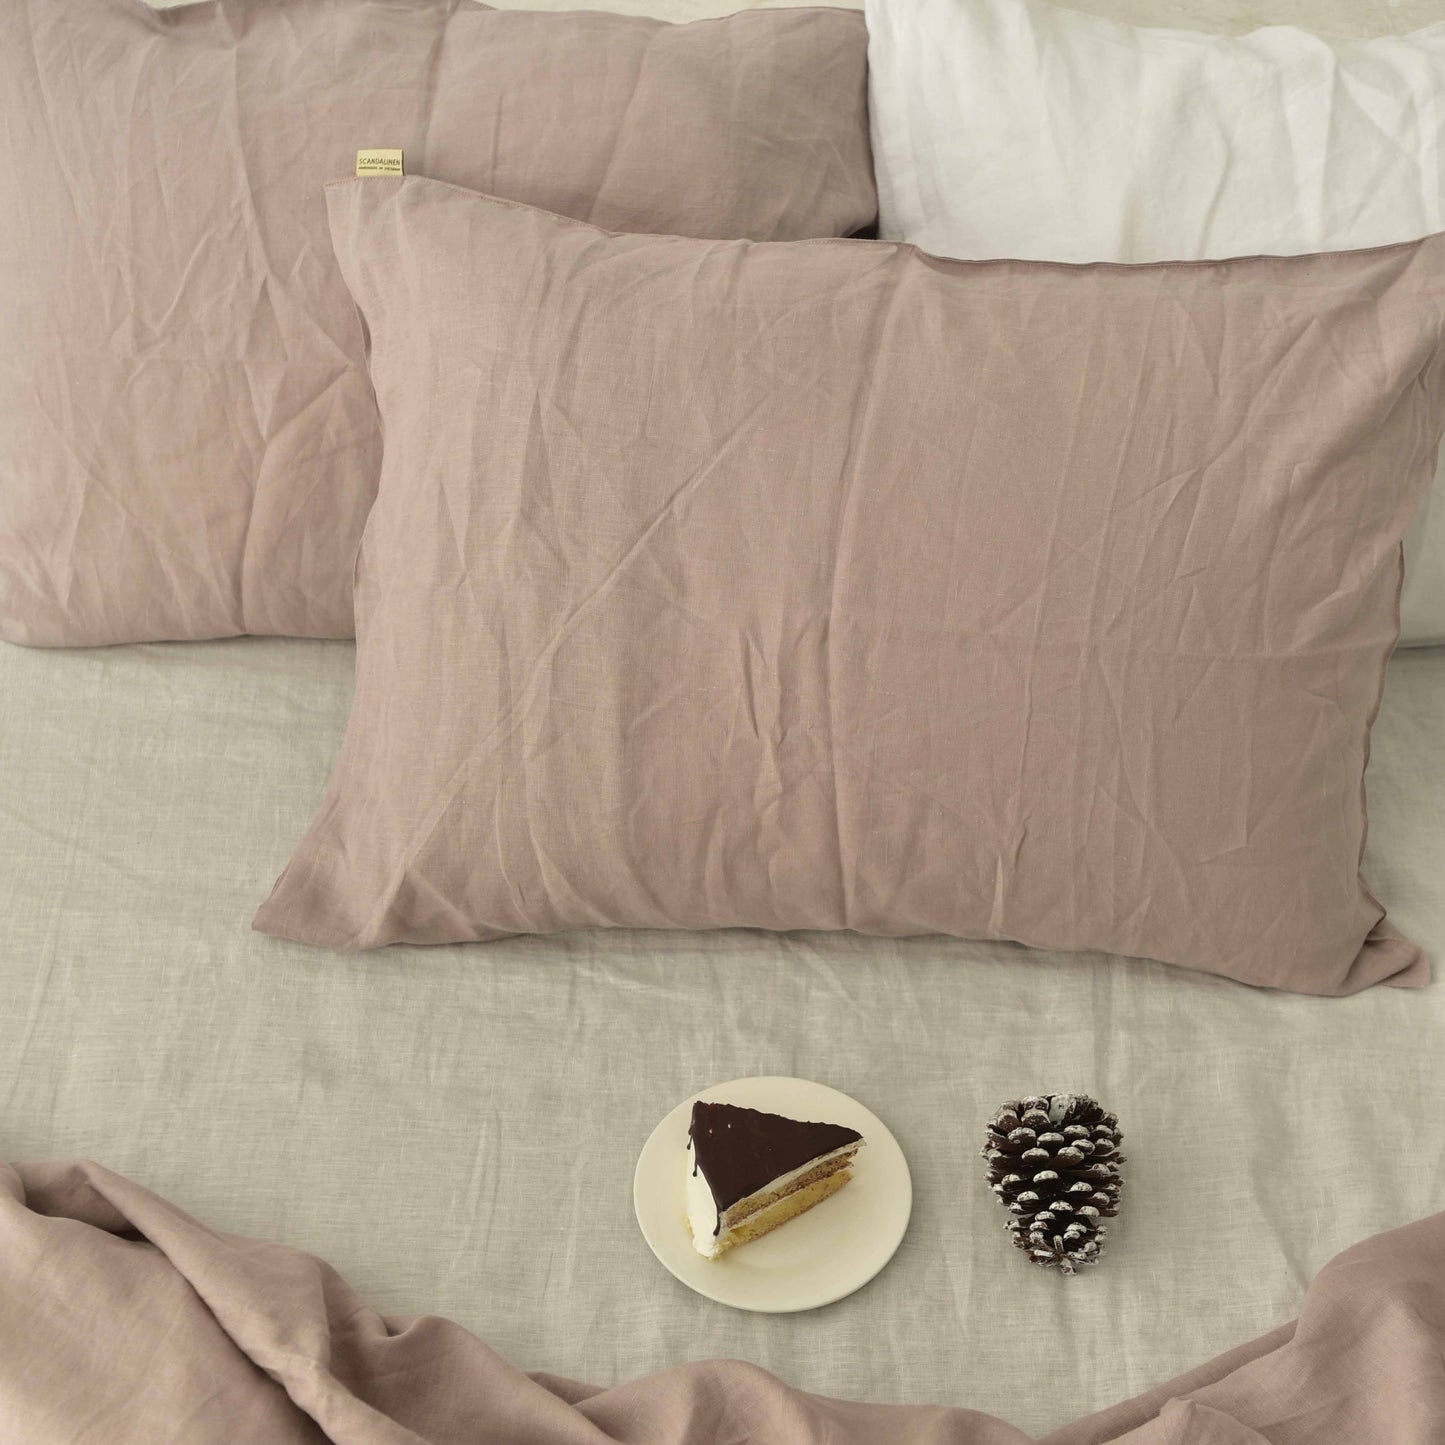 Light Brown French Linen Pillowcase - Plain Dyeing 17